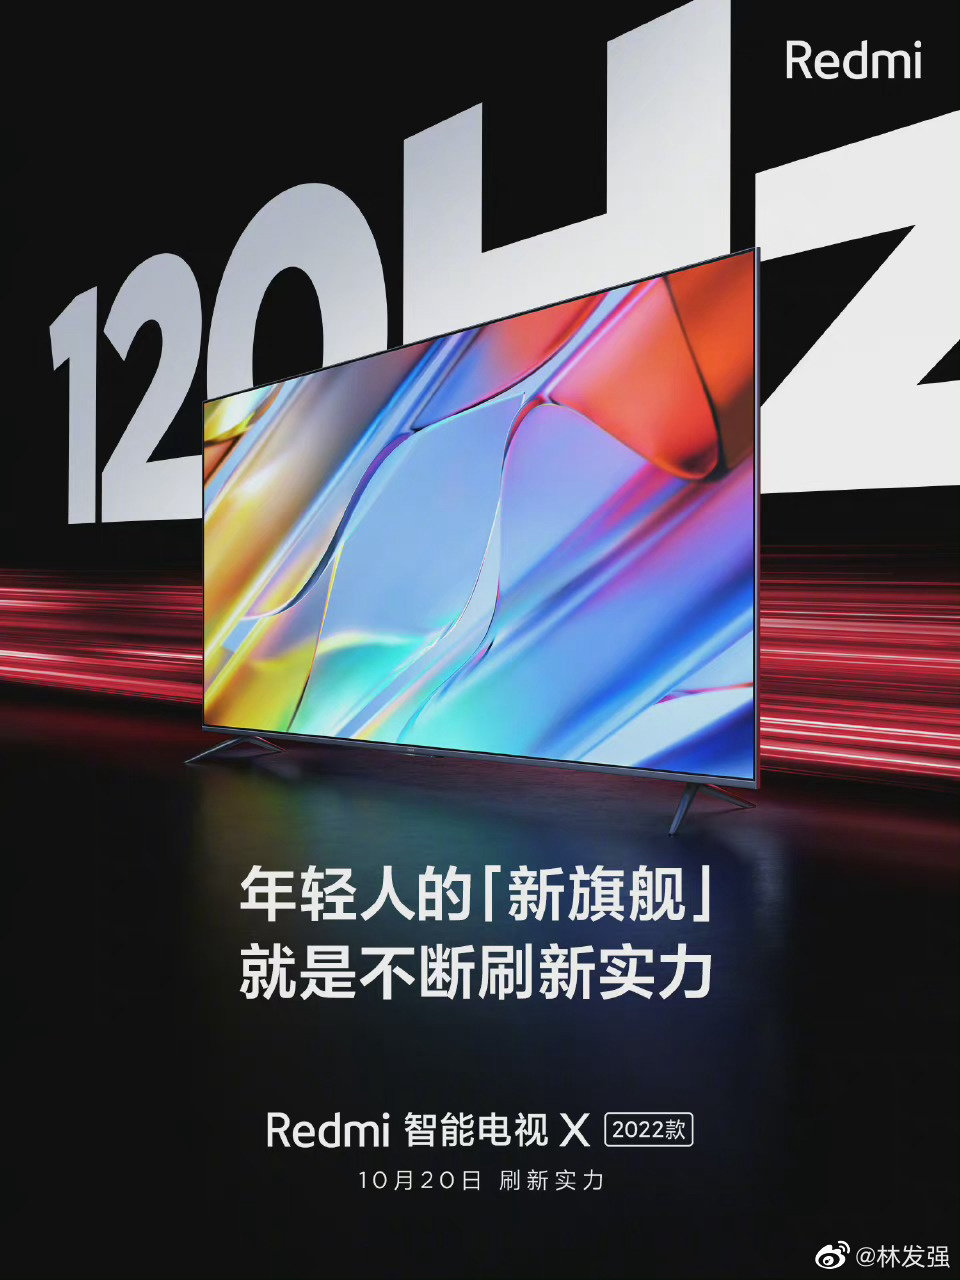 Redmi Smart TV X 2022 120Hz Refresh Rate Display